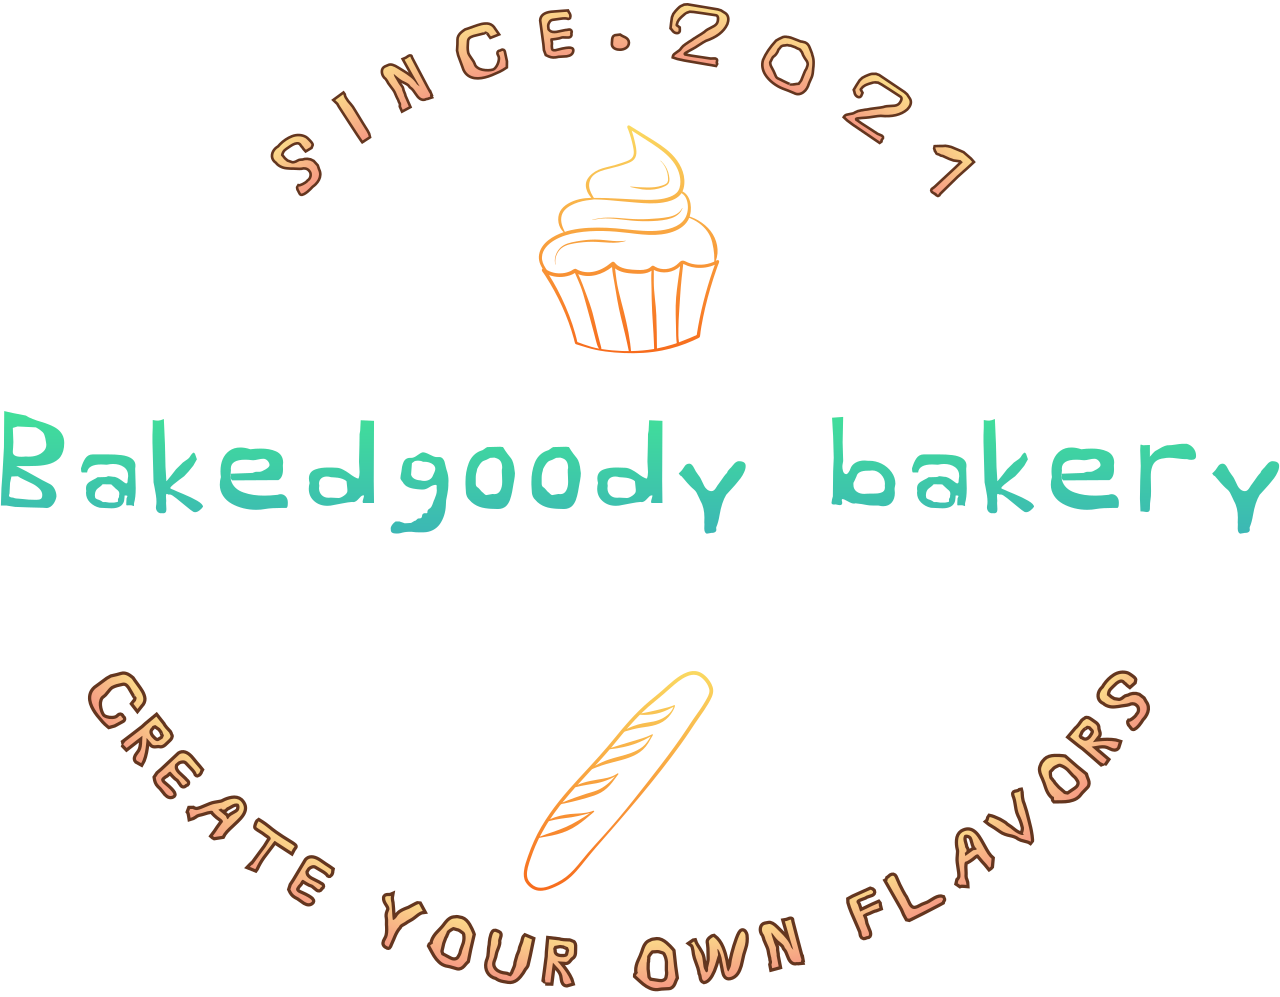 Bakedgoody bakery's logo